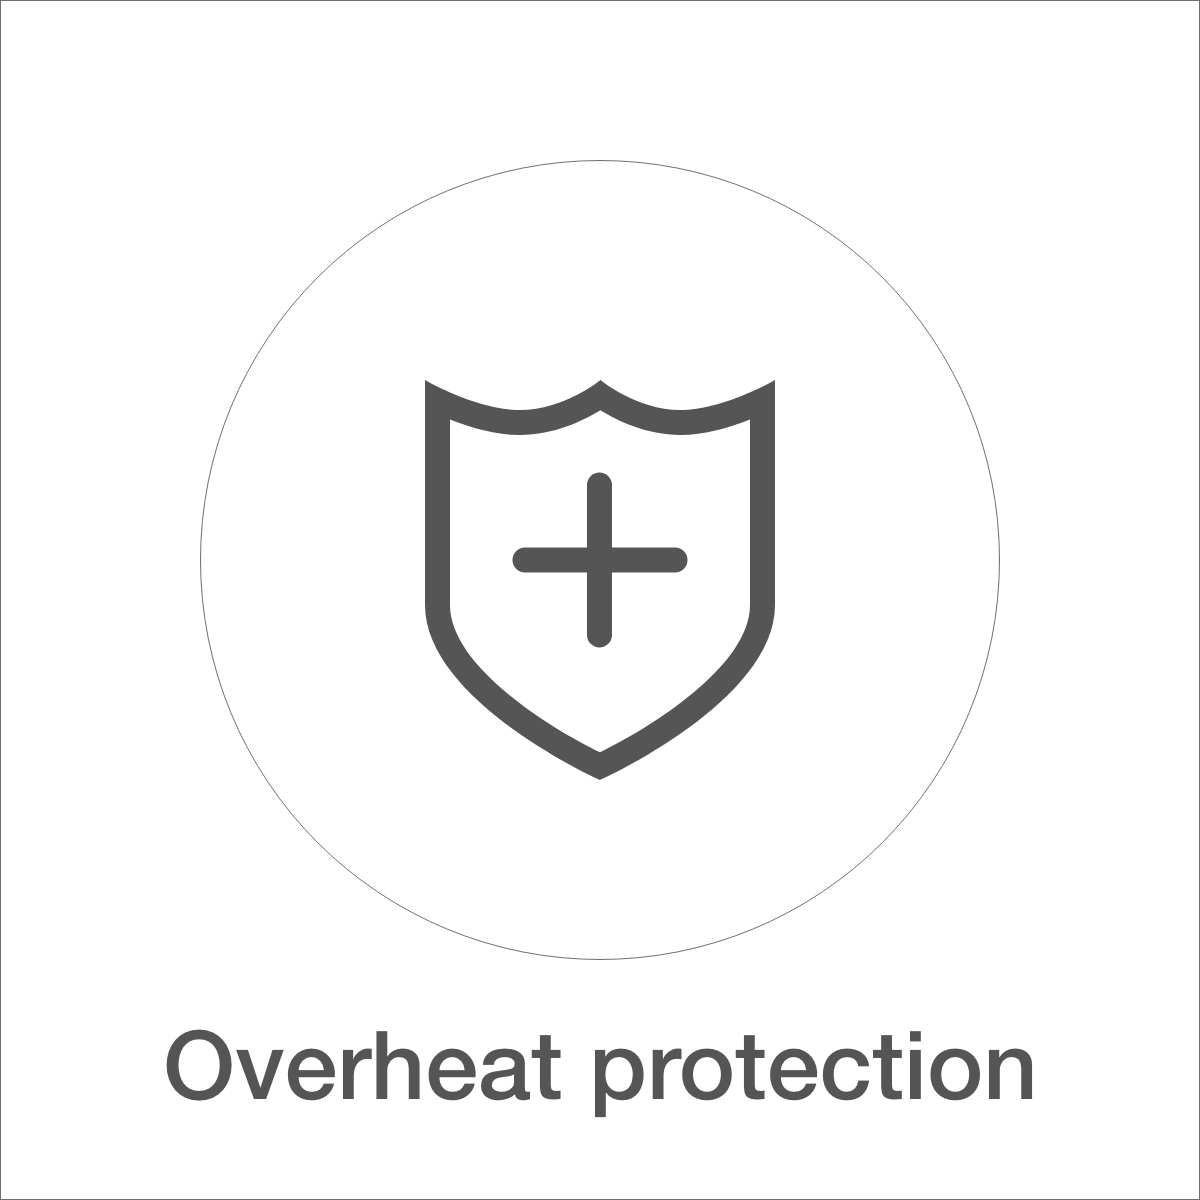 Overheat protection icon